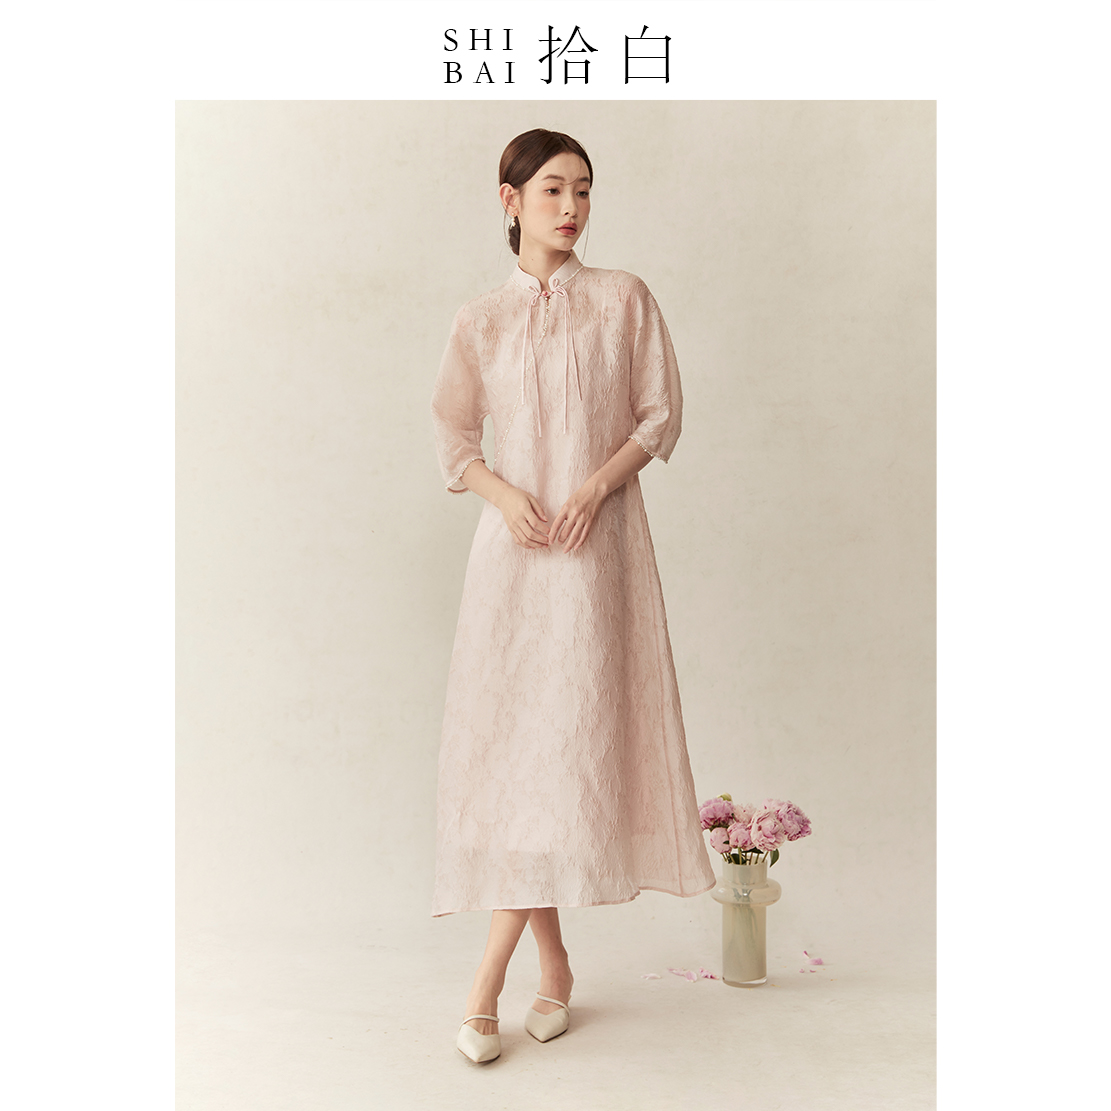 SHIBAI拾白新中式连衣裙女提花纱镶珍珠边改良旗袍日常年轻款粉色-图2